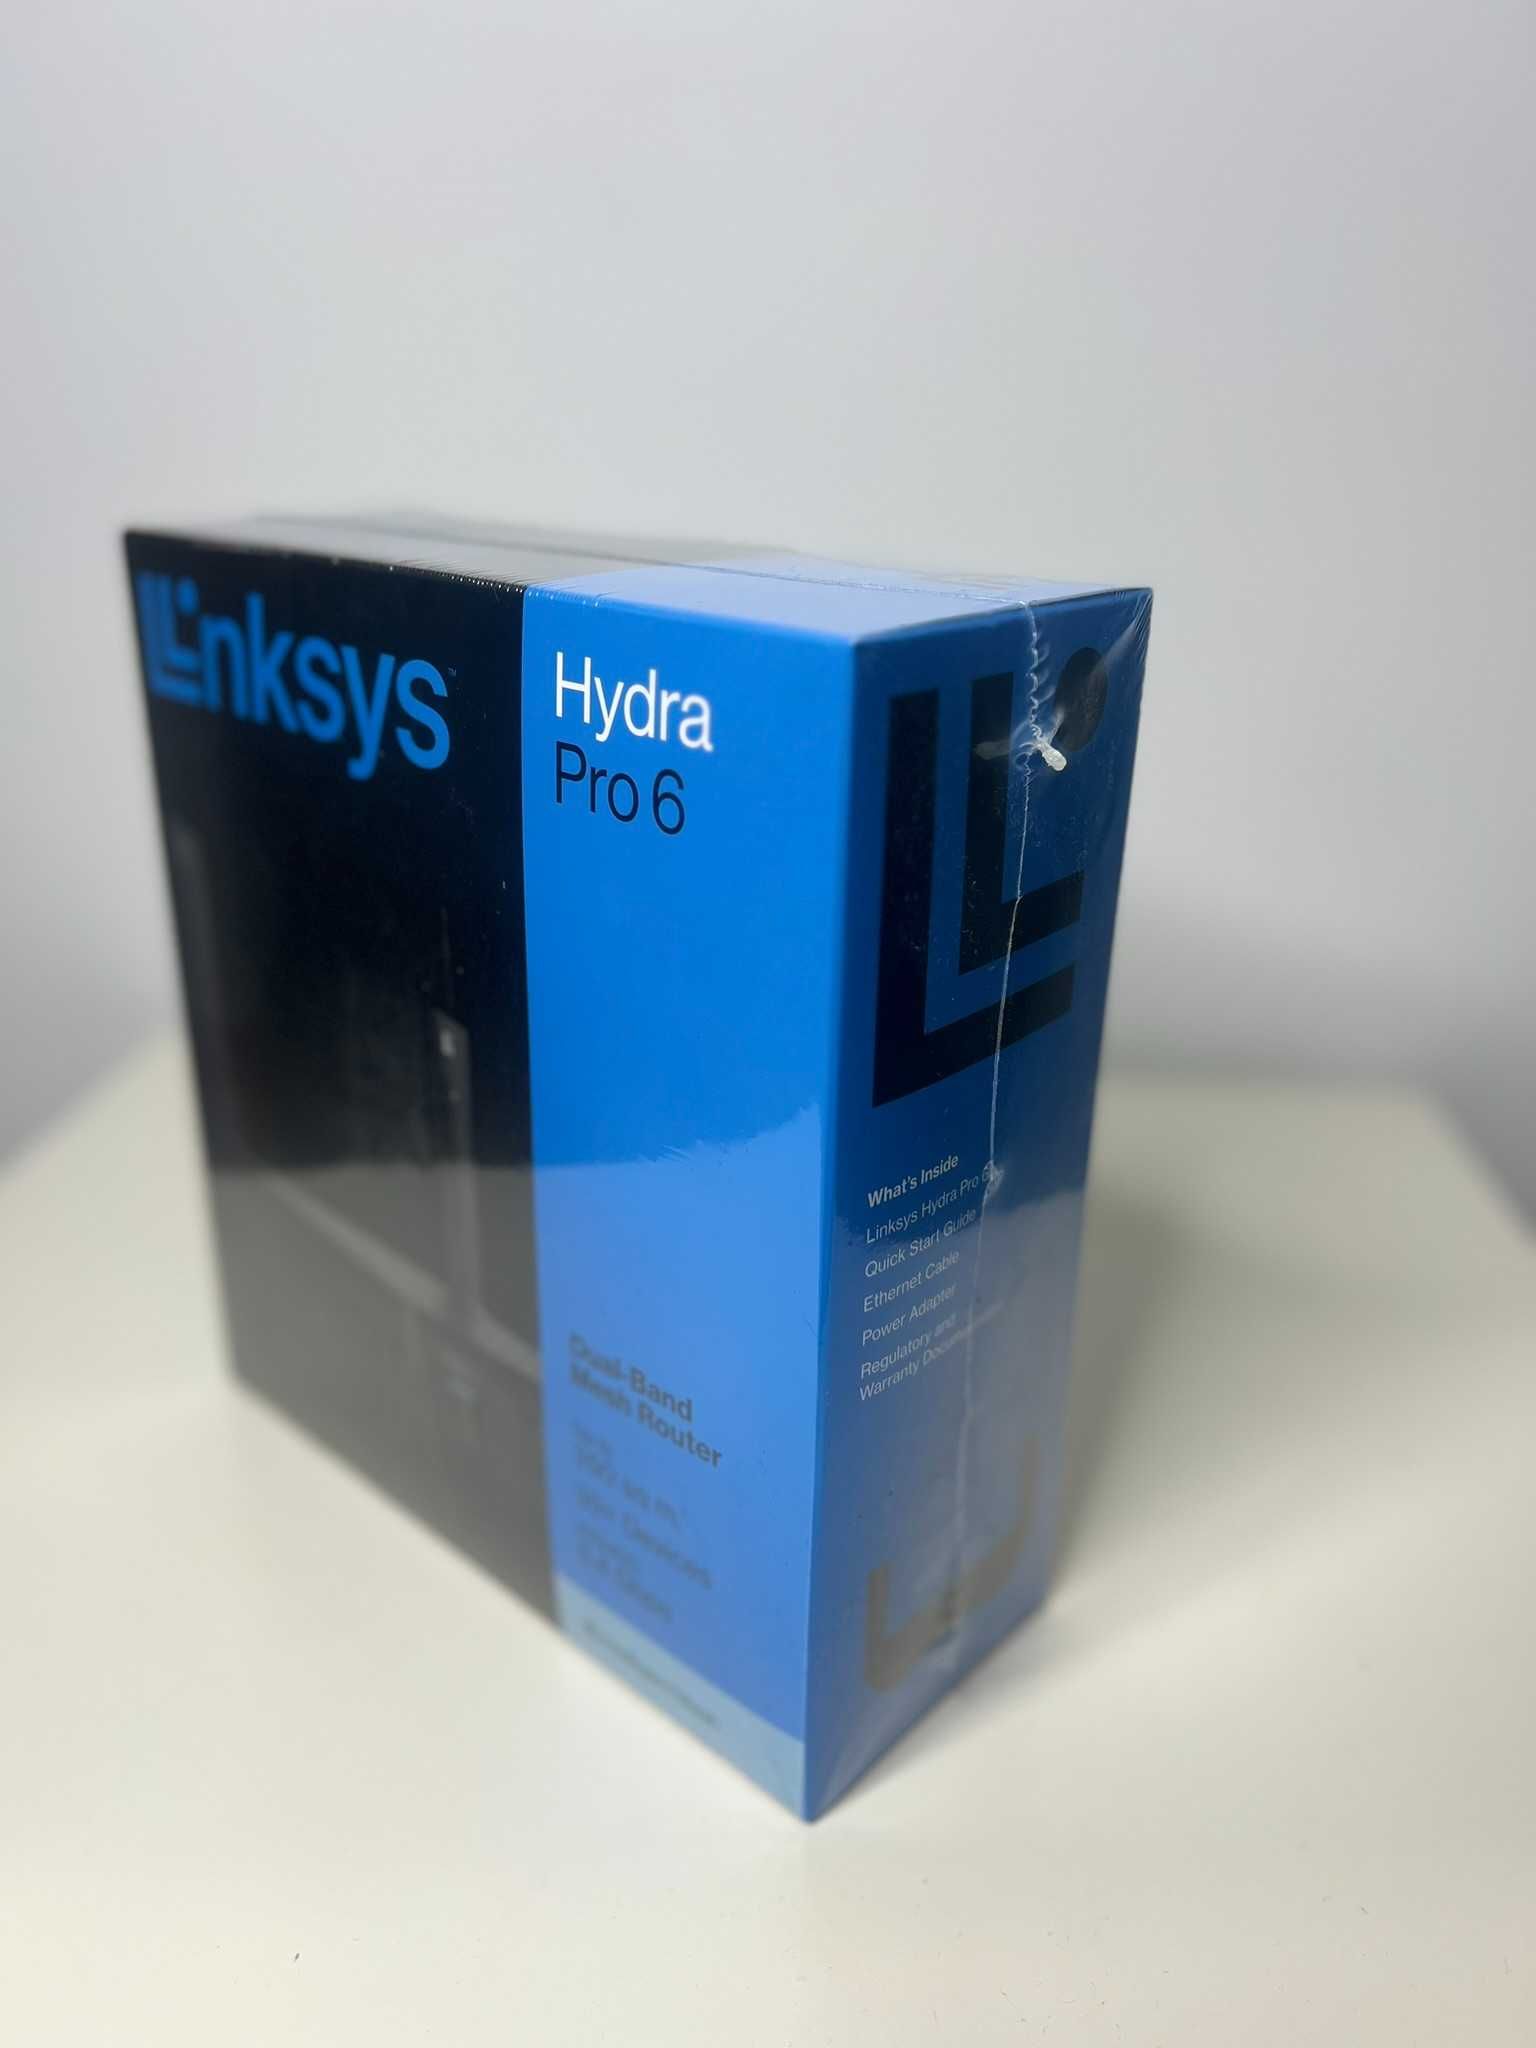 Linksys Hydra Pro 6+Atlas 6 3-Pack AX3000